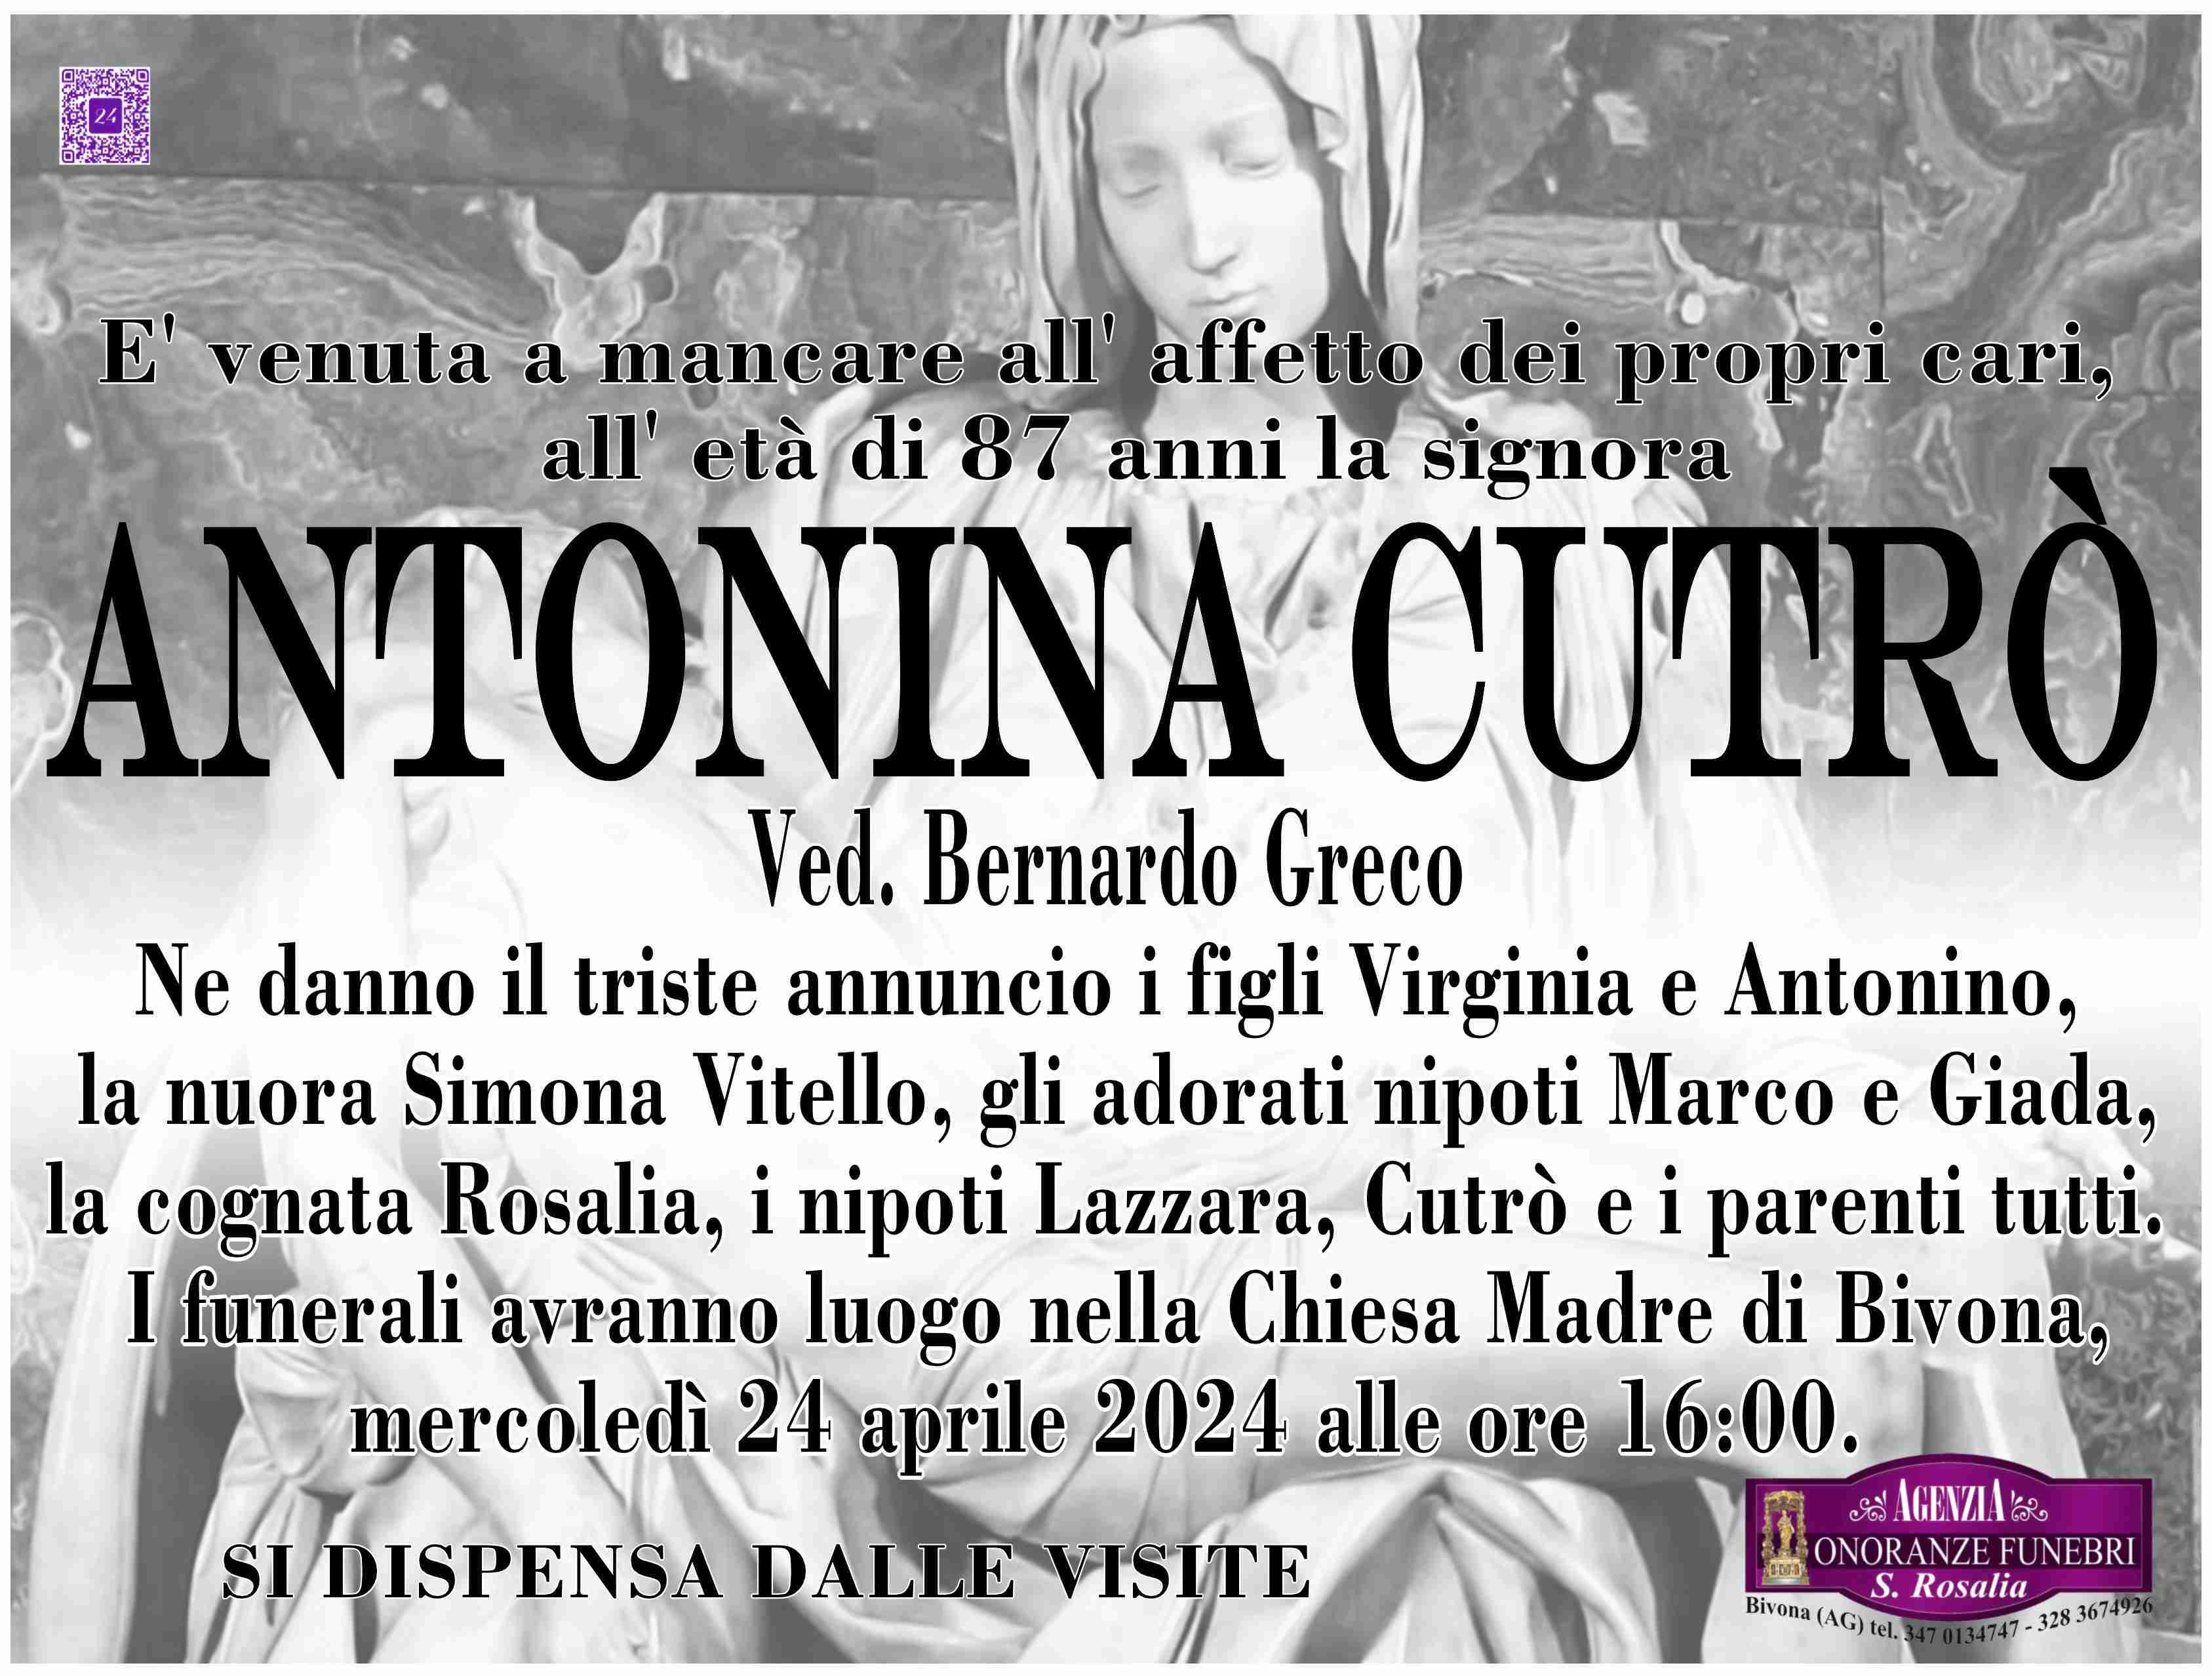 Antonina Cutrò